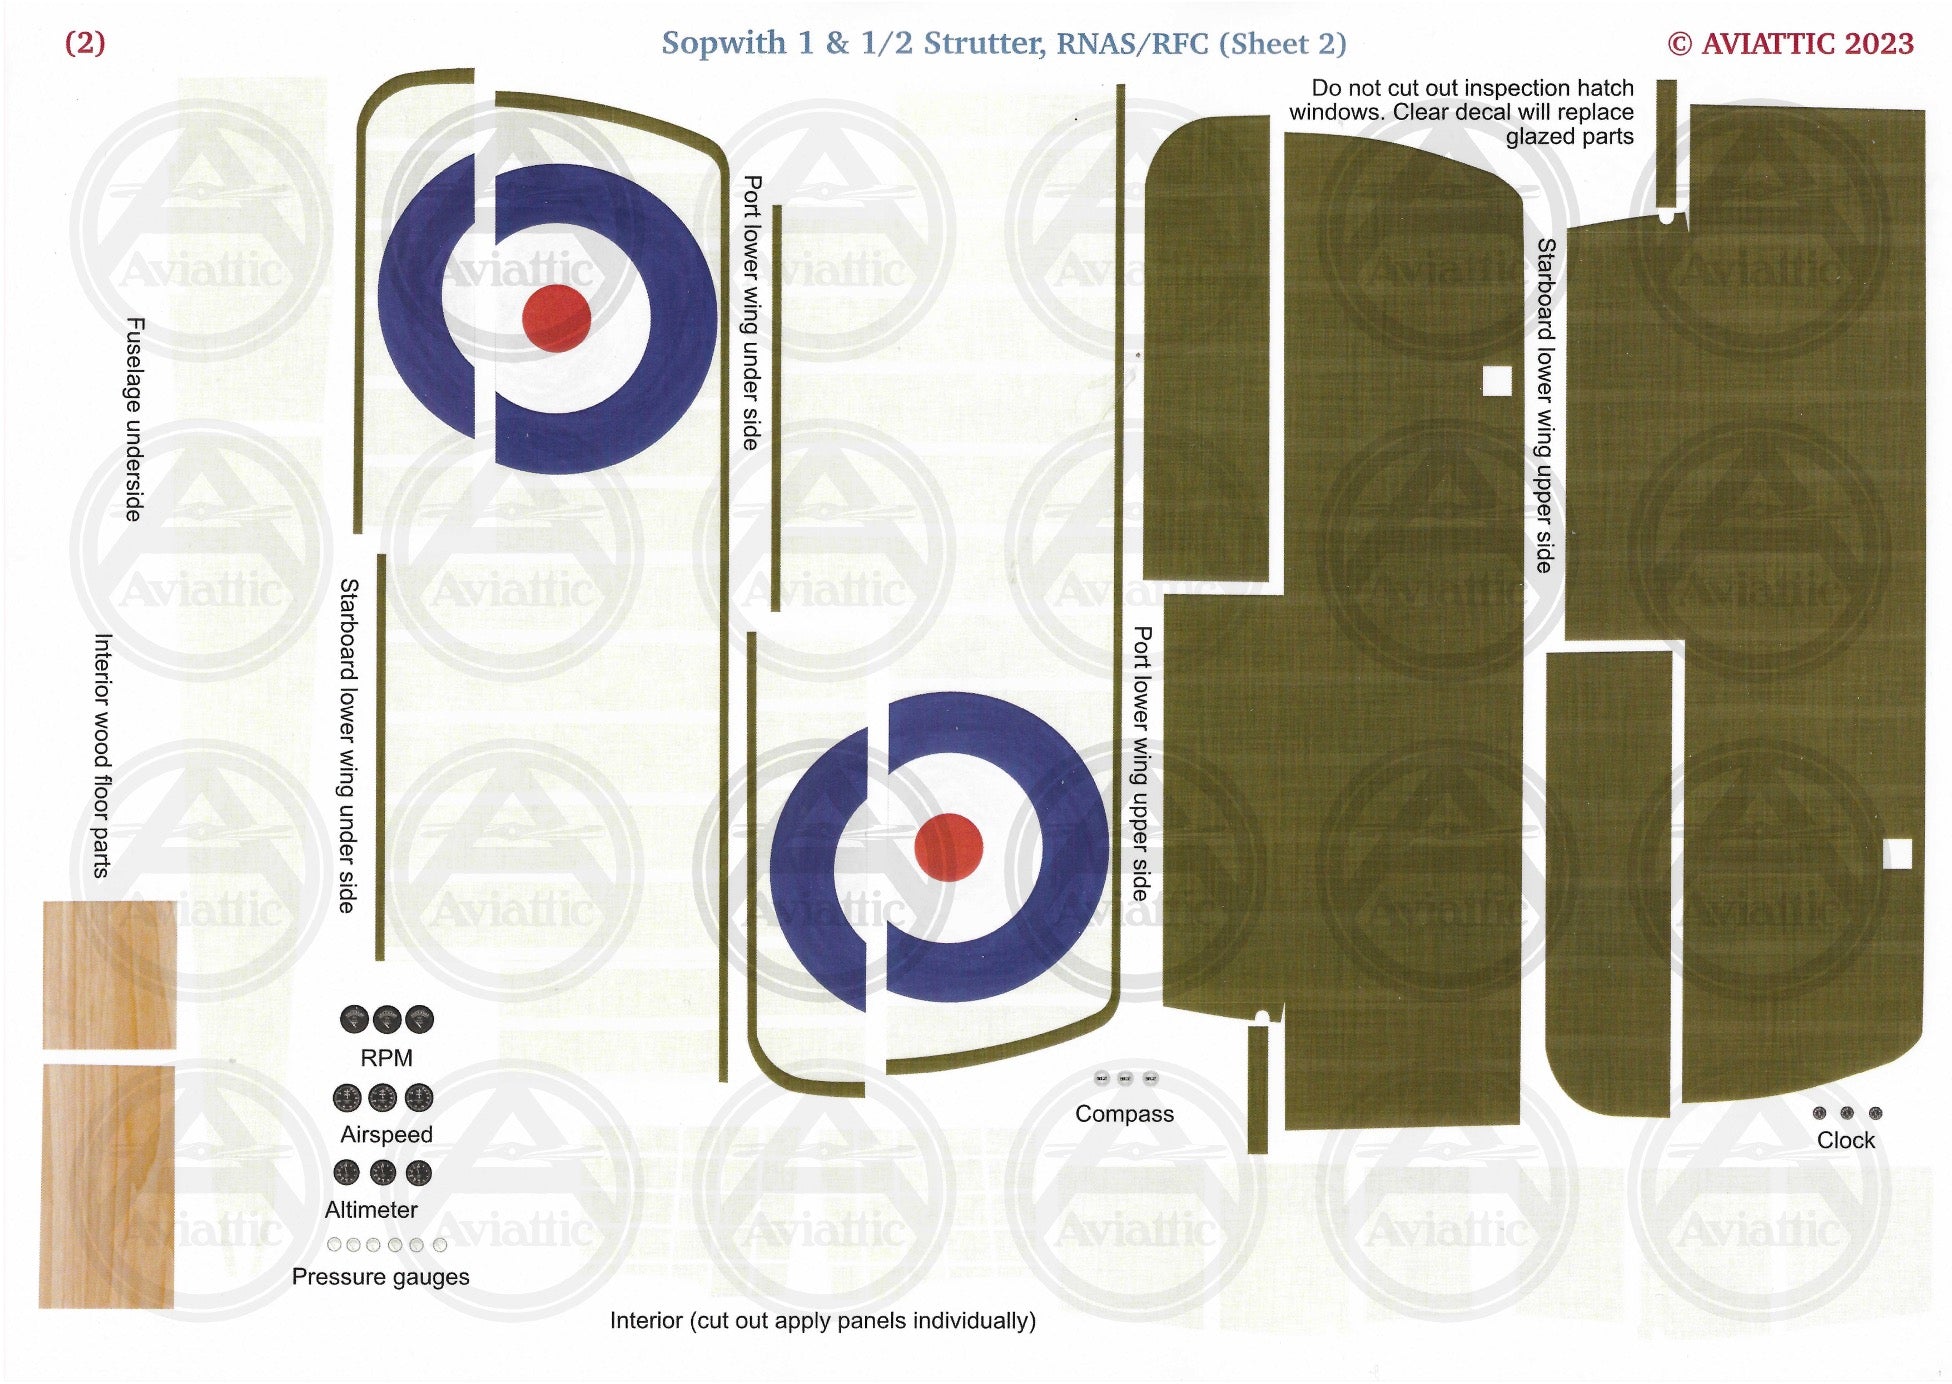 1/32 - Kit Bundle 2.0 - Roden - Sopwith 1 & 1/2 Strutter - A1083 - N° 45 Sqn, RFC, Feb/Mar 1917